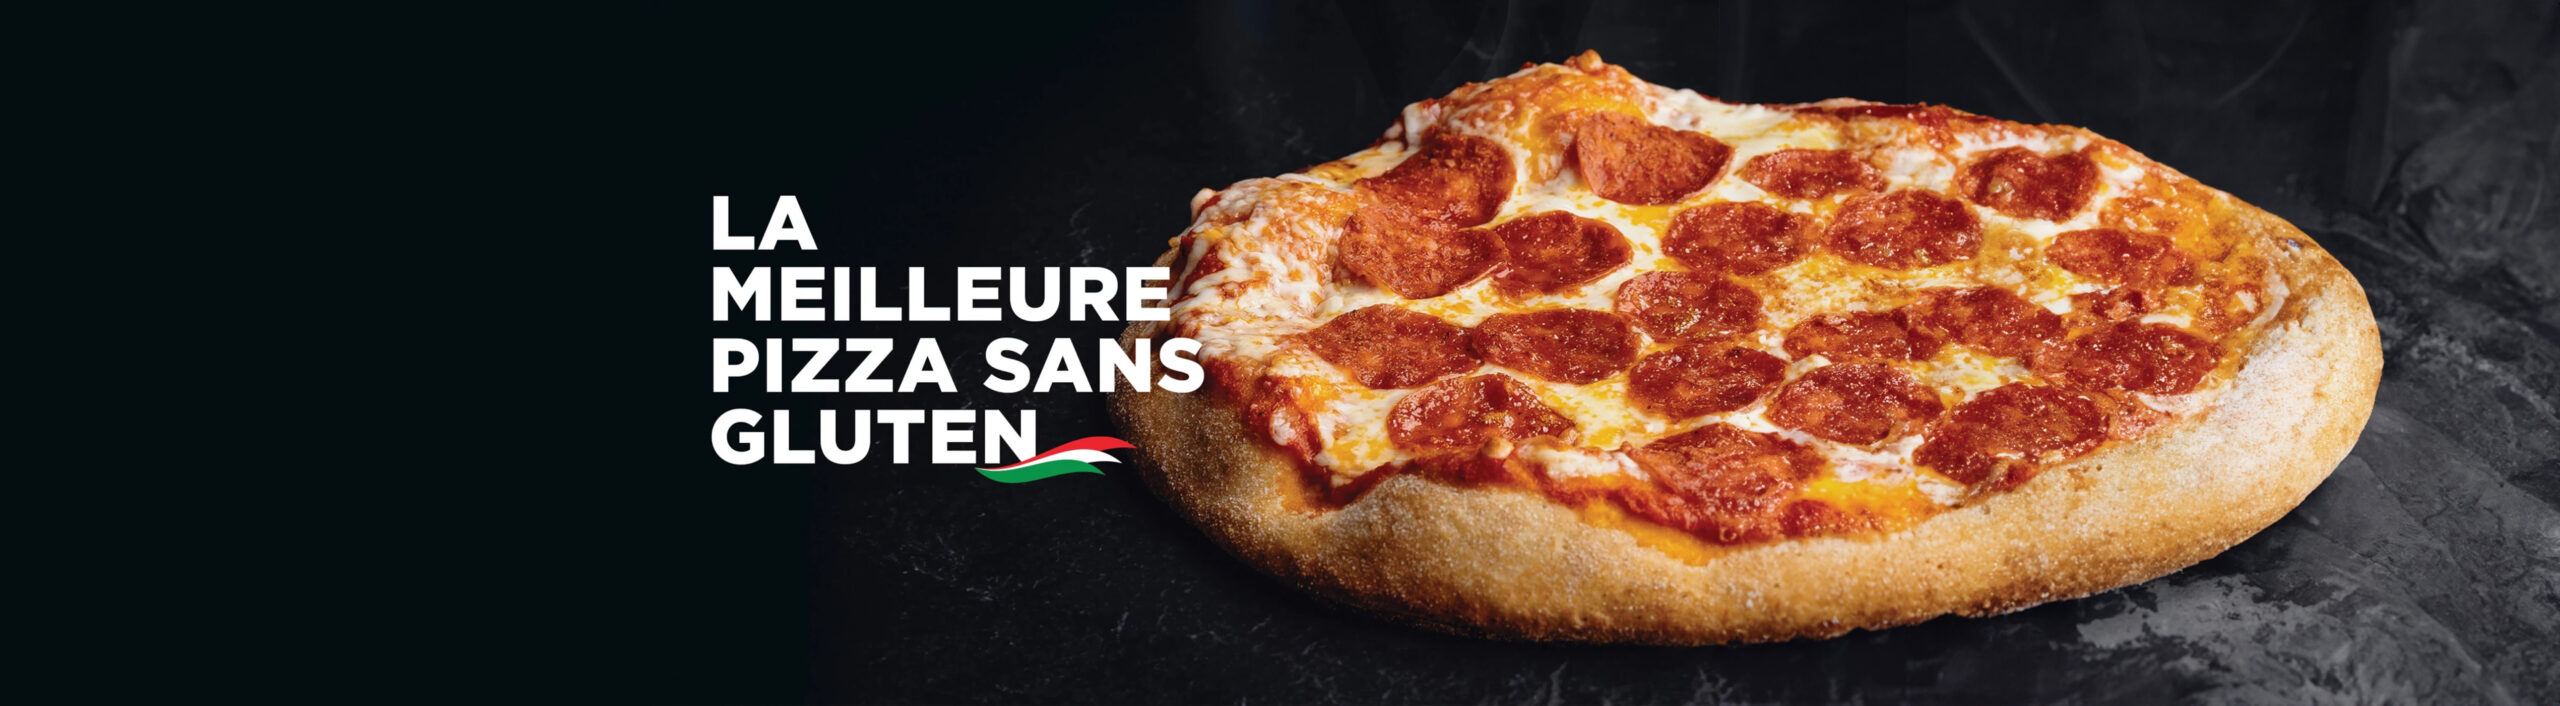 BANNER-pizza-fr-5080x1400